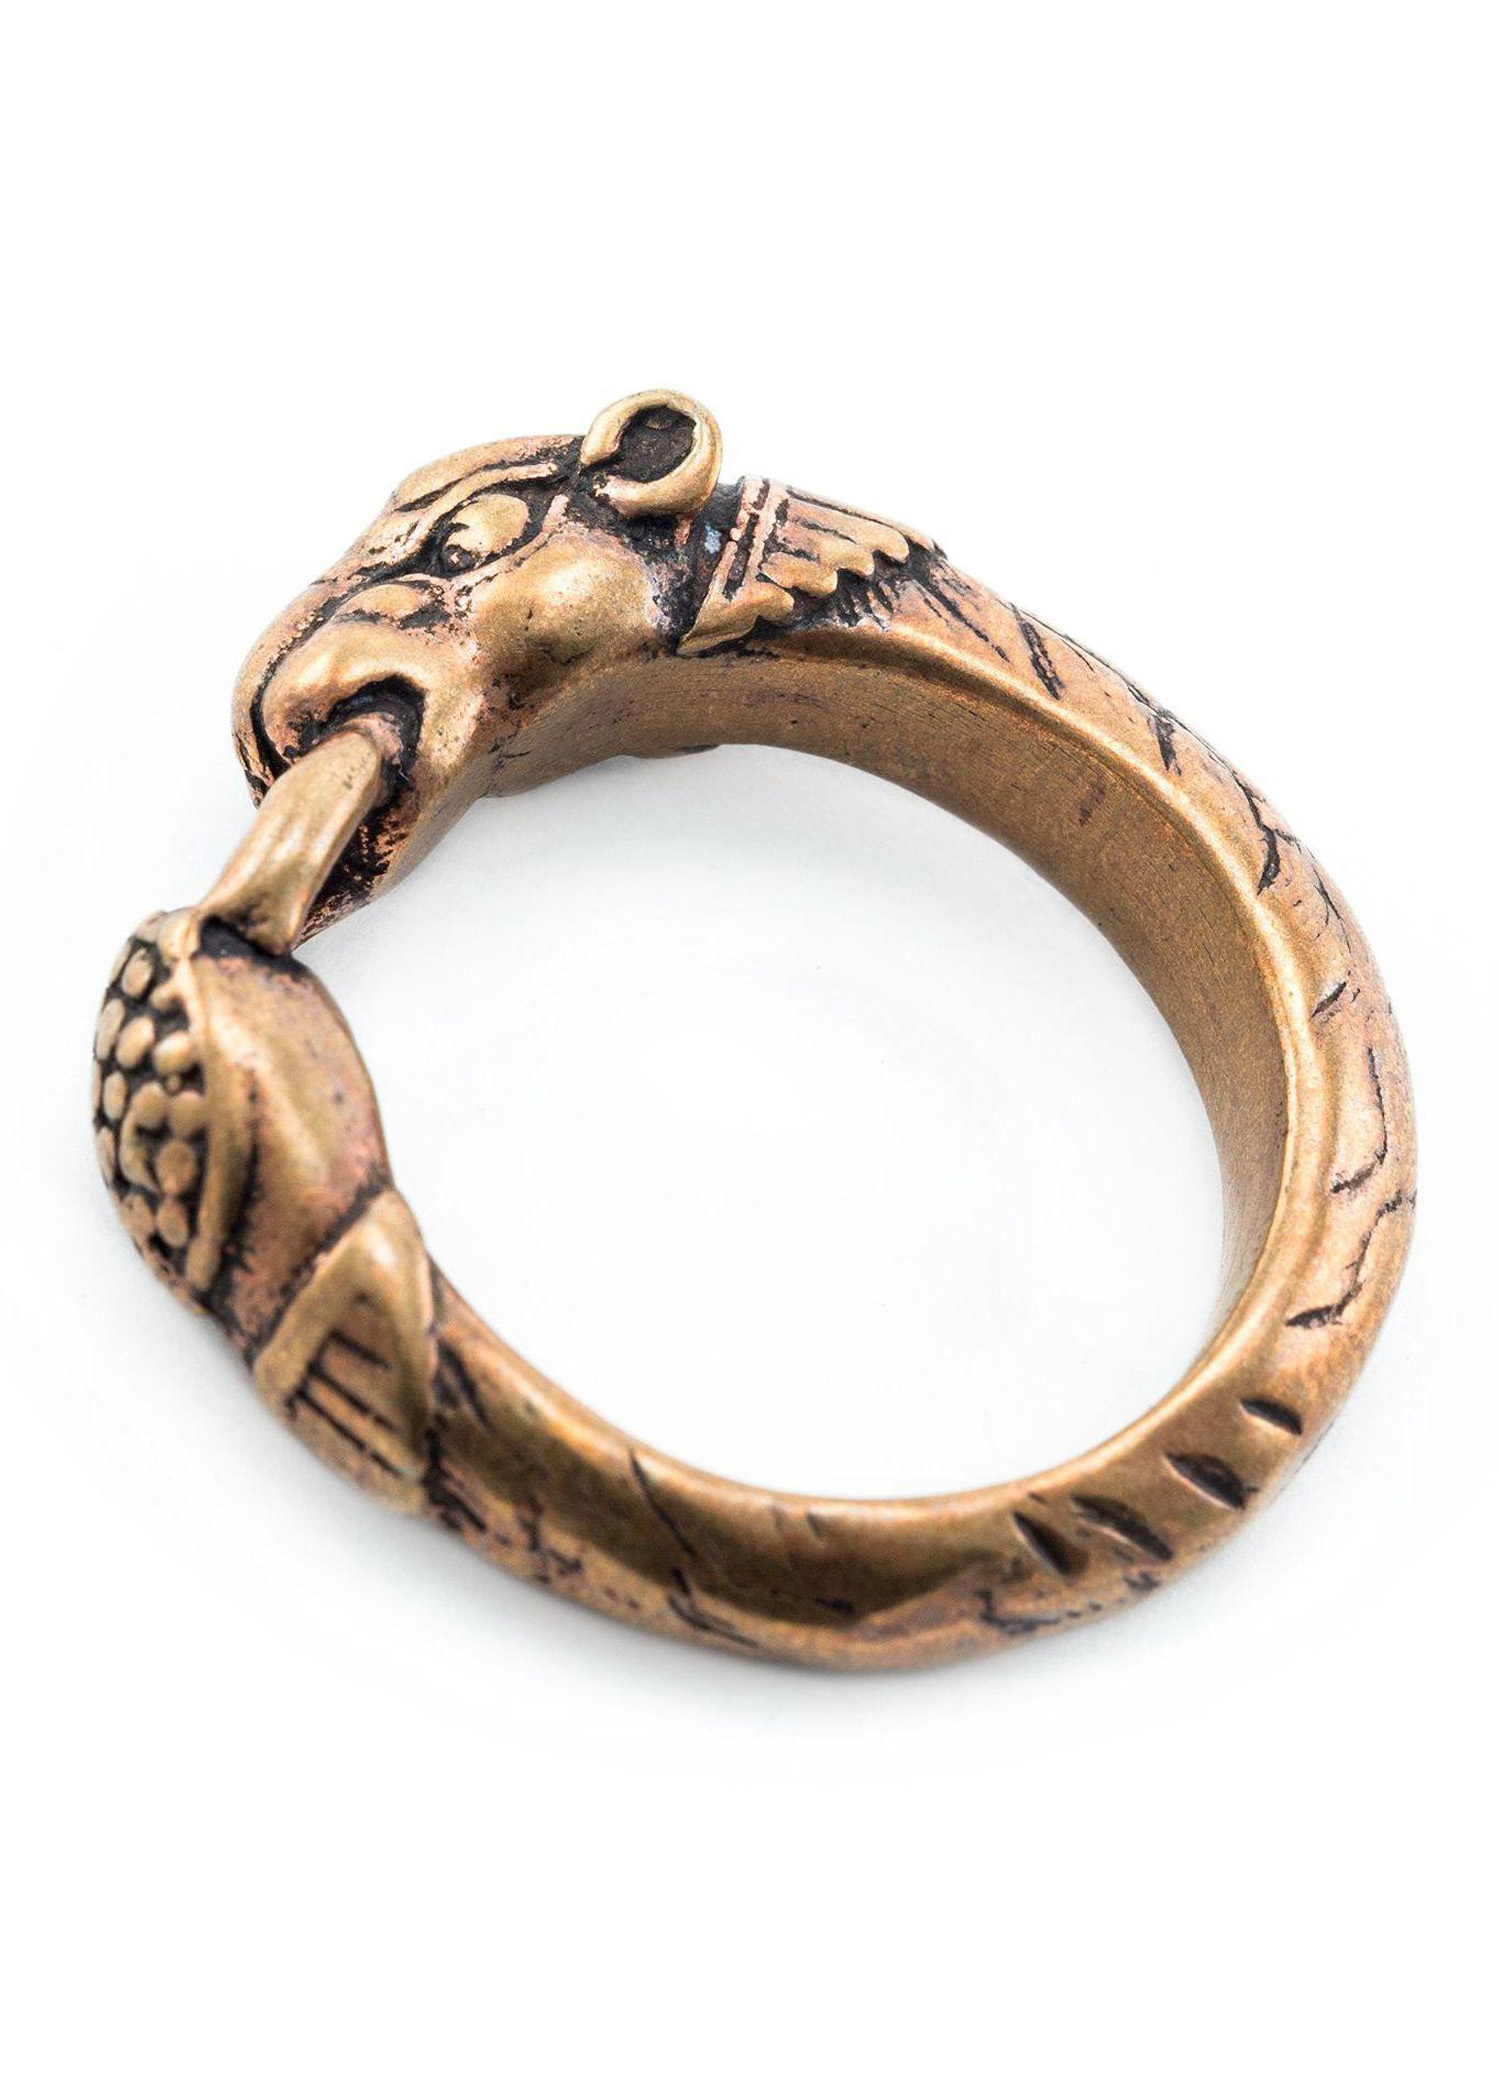 Wikinger Ring mit Hundekopf, Bronze, Ringgröße 23/72